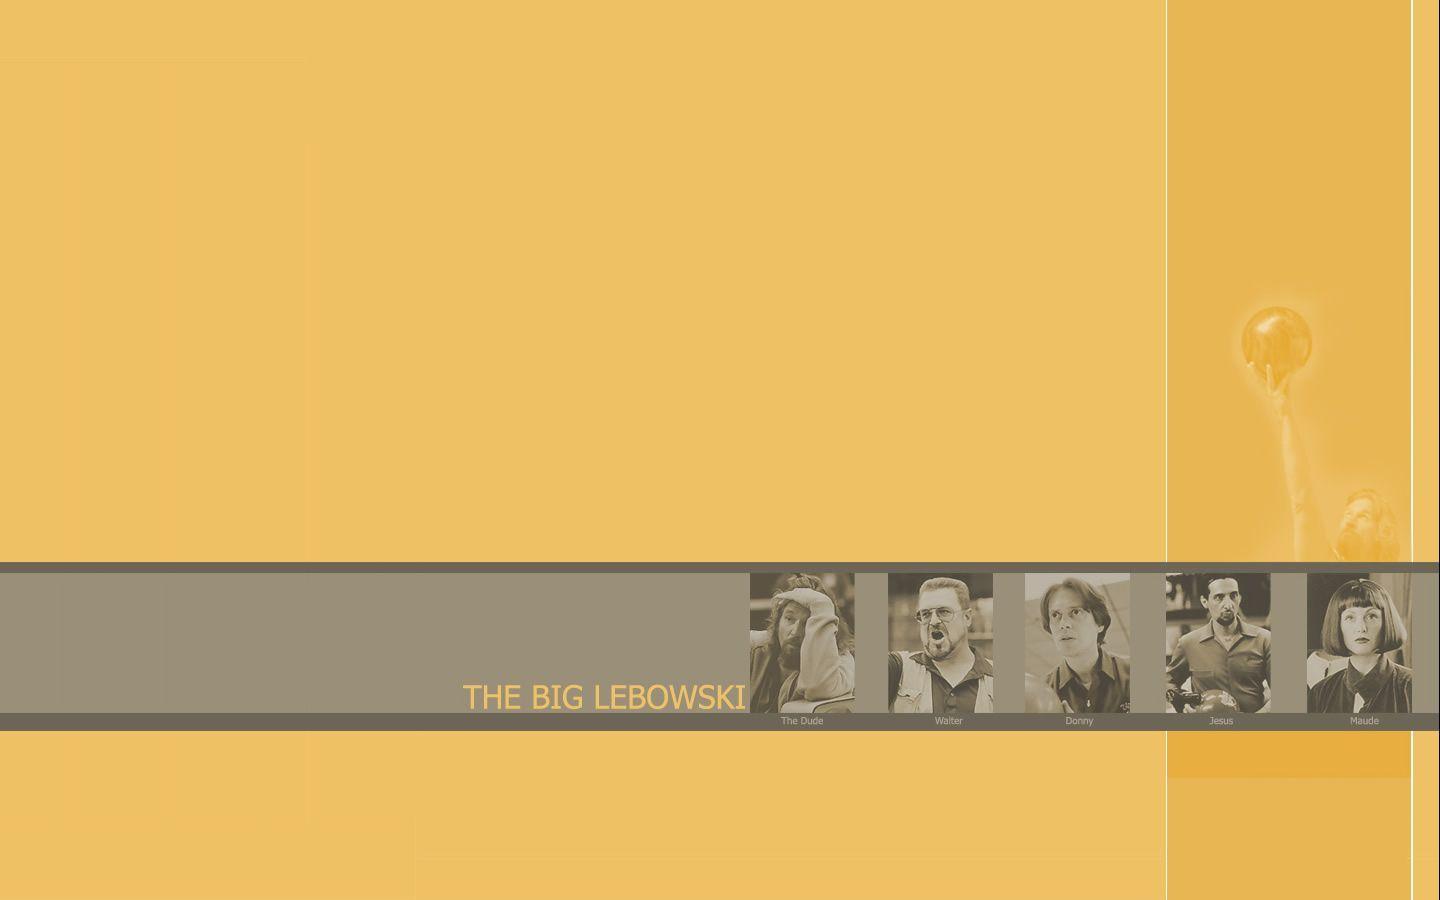 The Big Lebowski Computer Wallpapers, Desk 4K Backgrounds